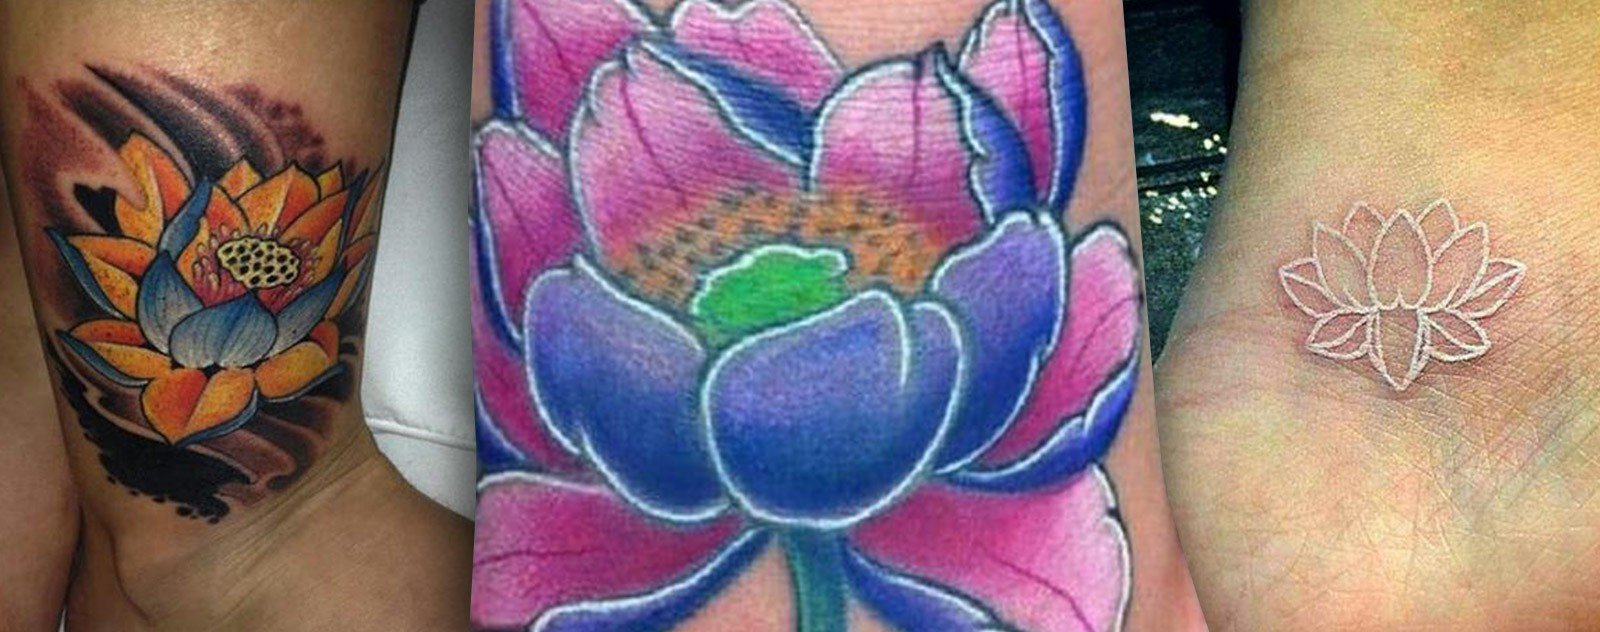 Chouette pivoine unalome tatouage fleure de lotus 